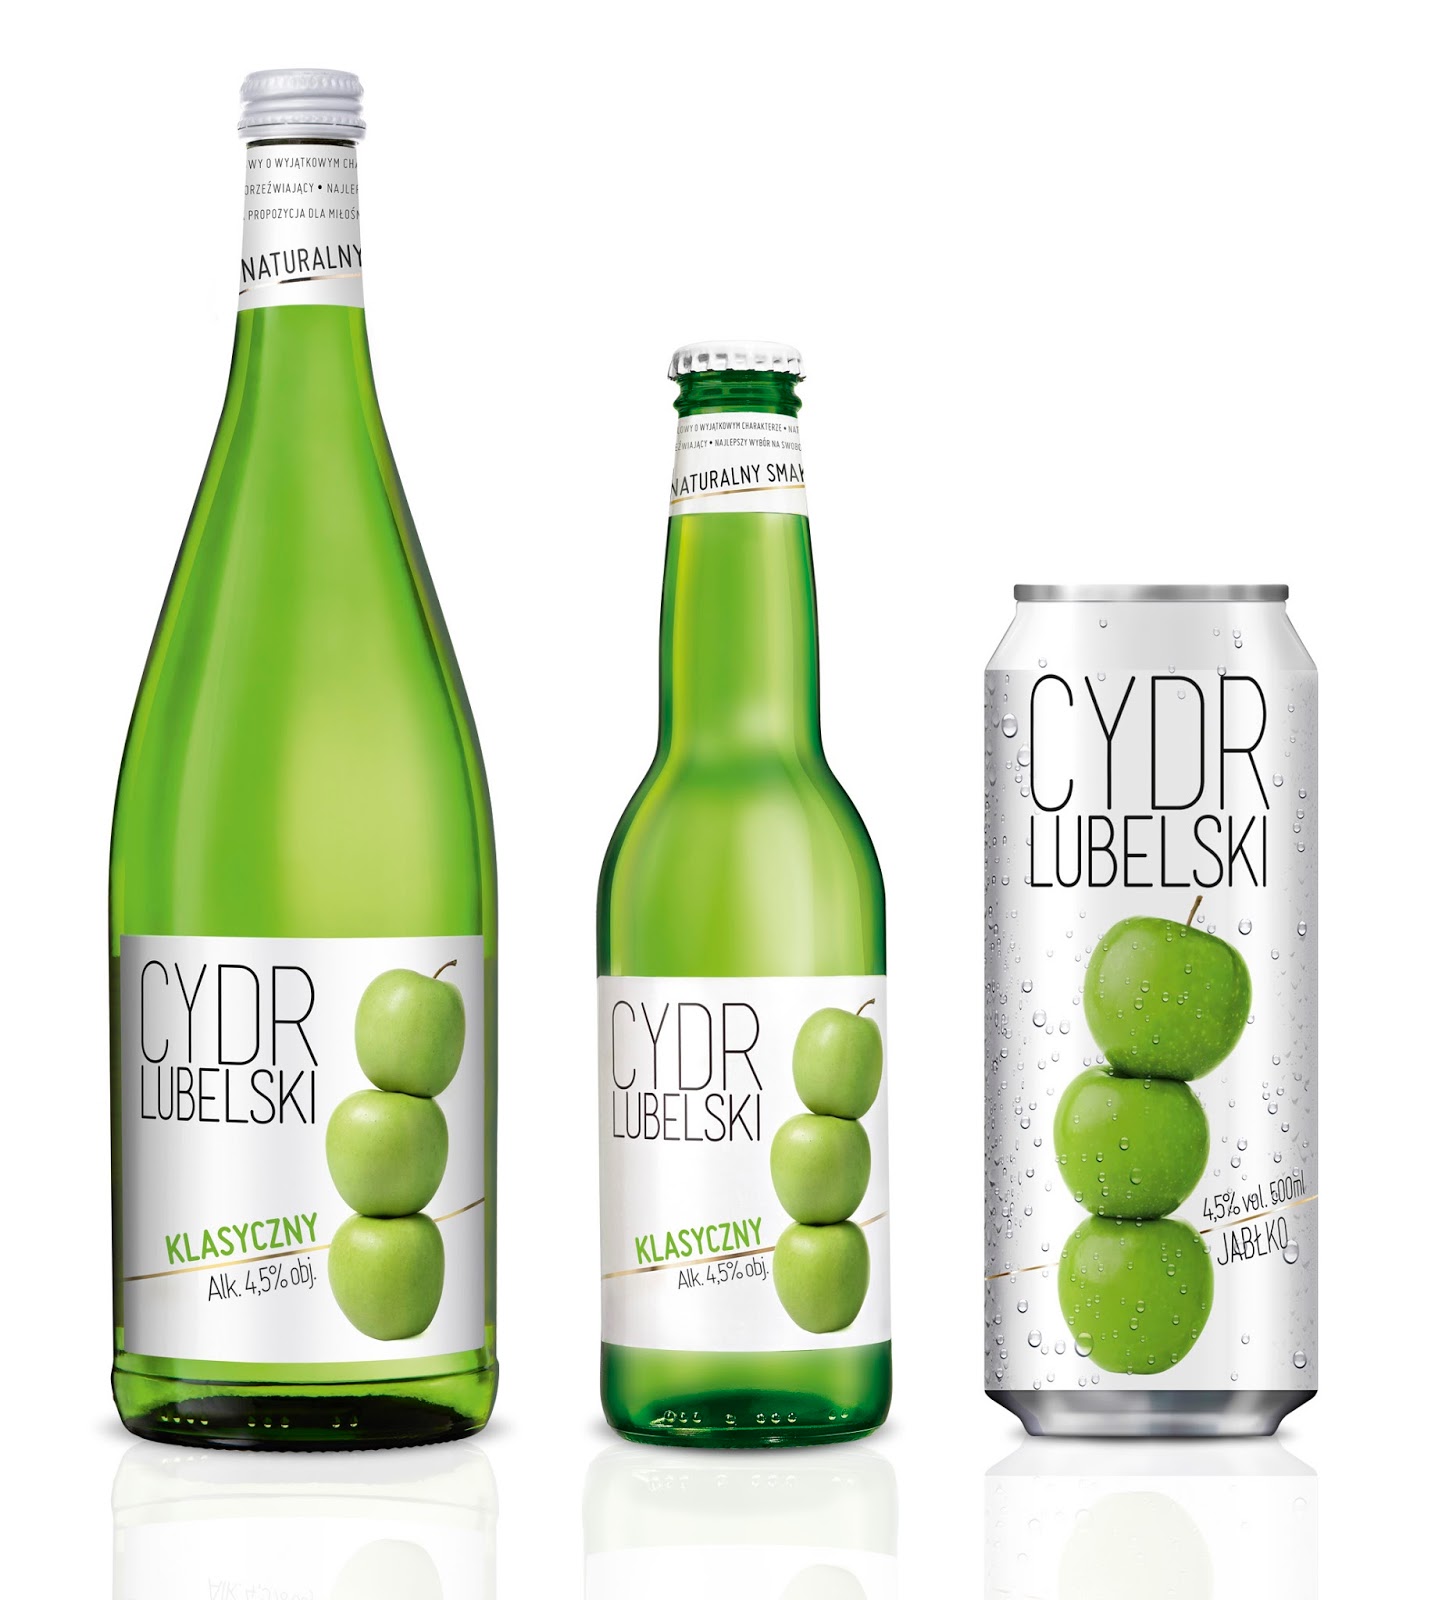 Cydr Lubelski苹果酒包装设计